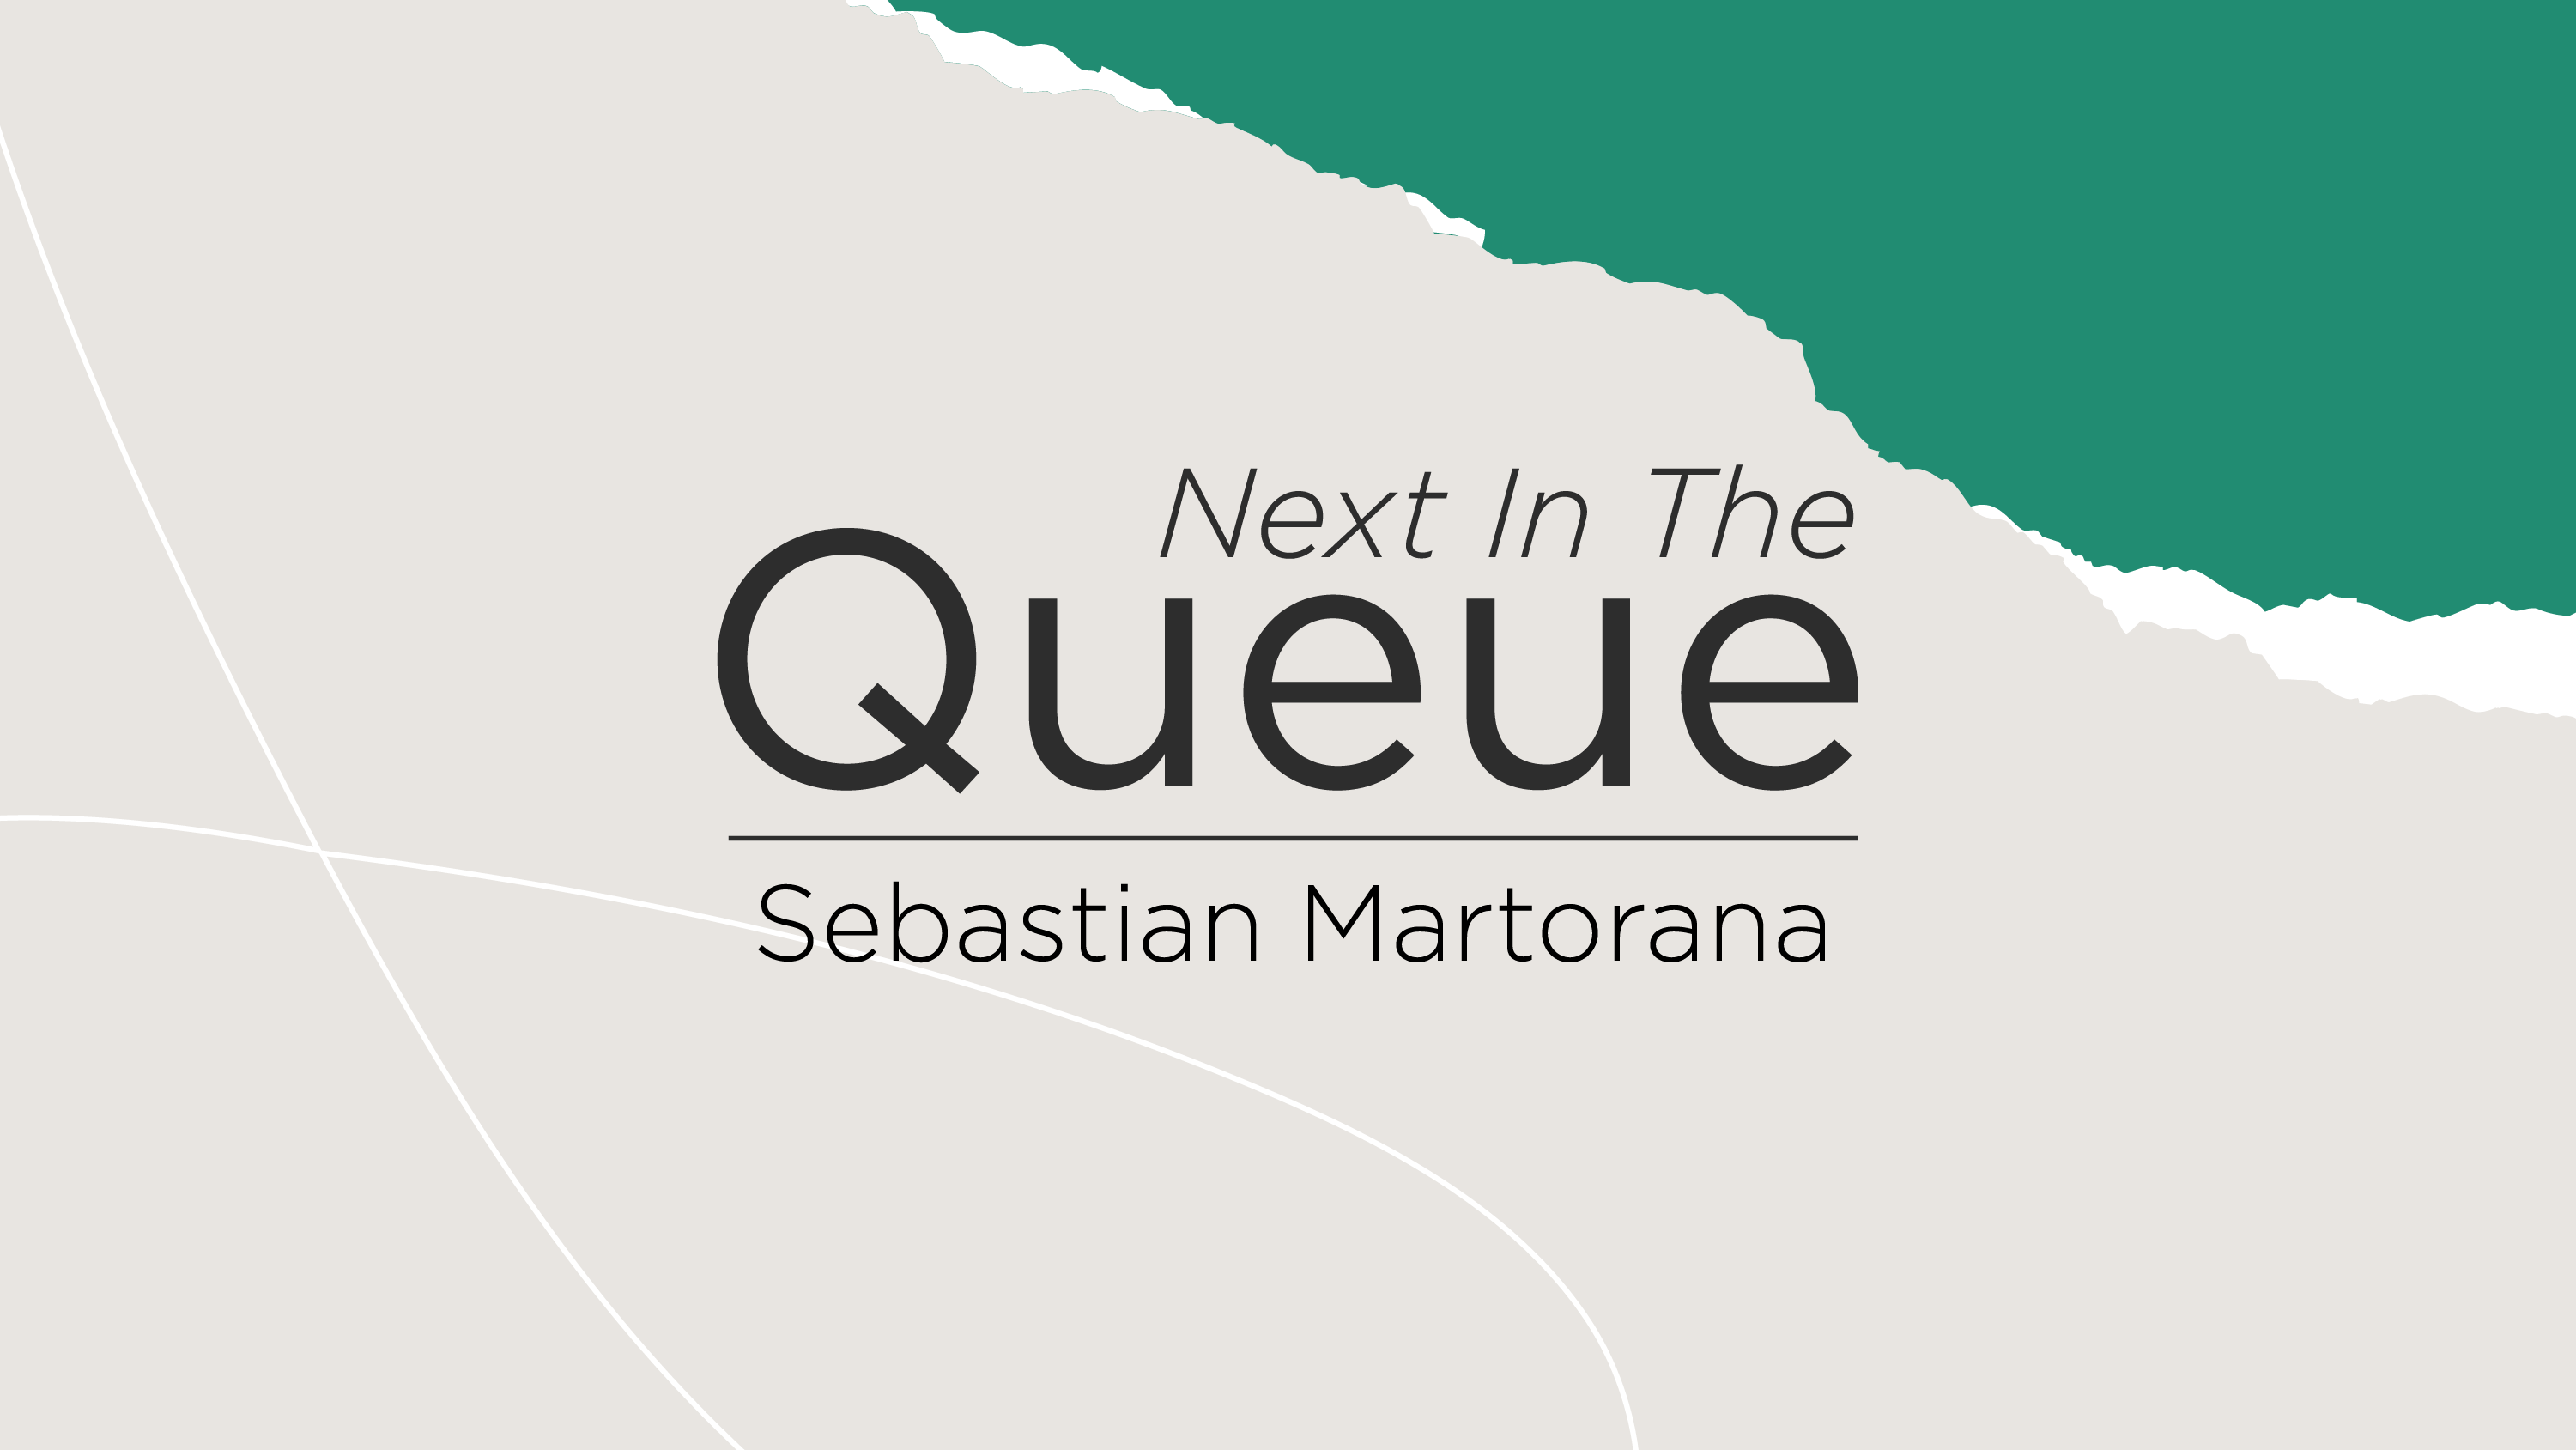 blog post cover graphic for The Queue featuring Sebastian Martorana